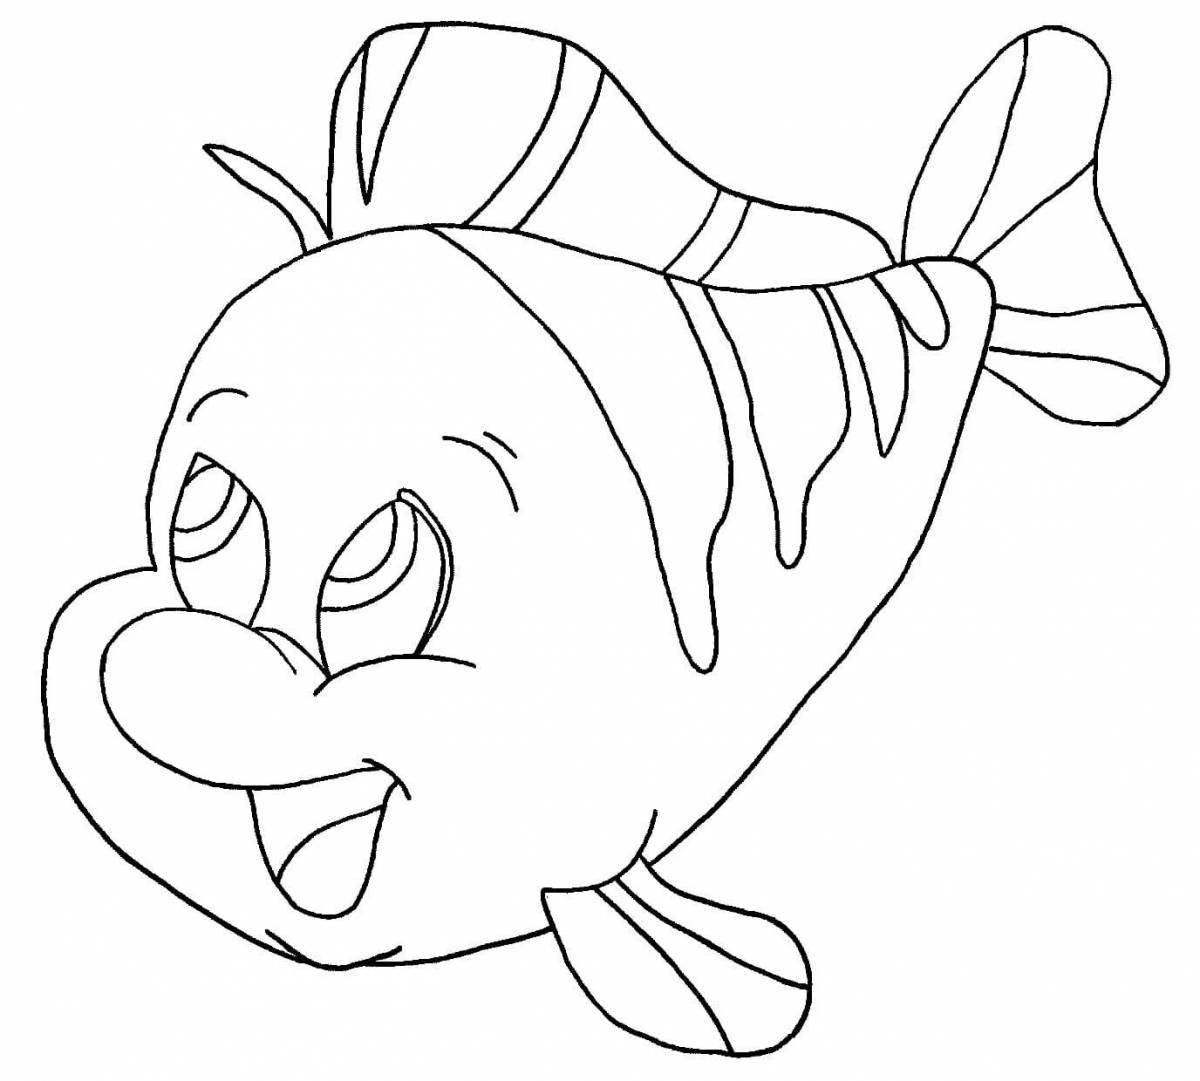 Раскраска гламурная рыбка для детей